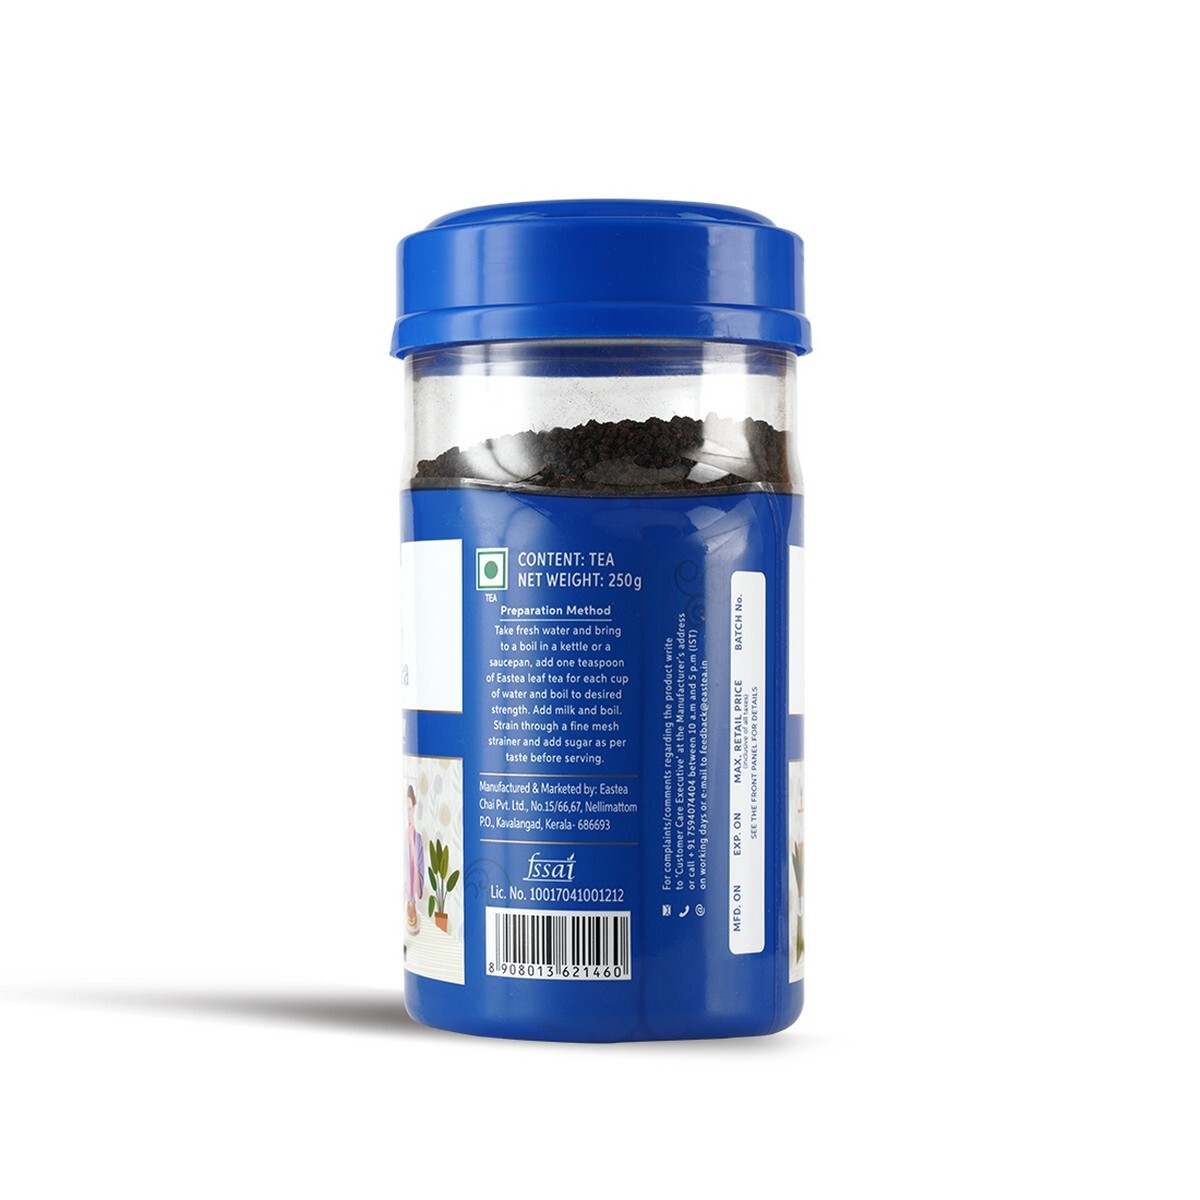 Eastea CTC Tea Powder 250g Jar